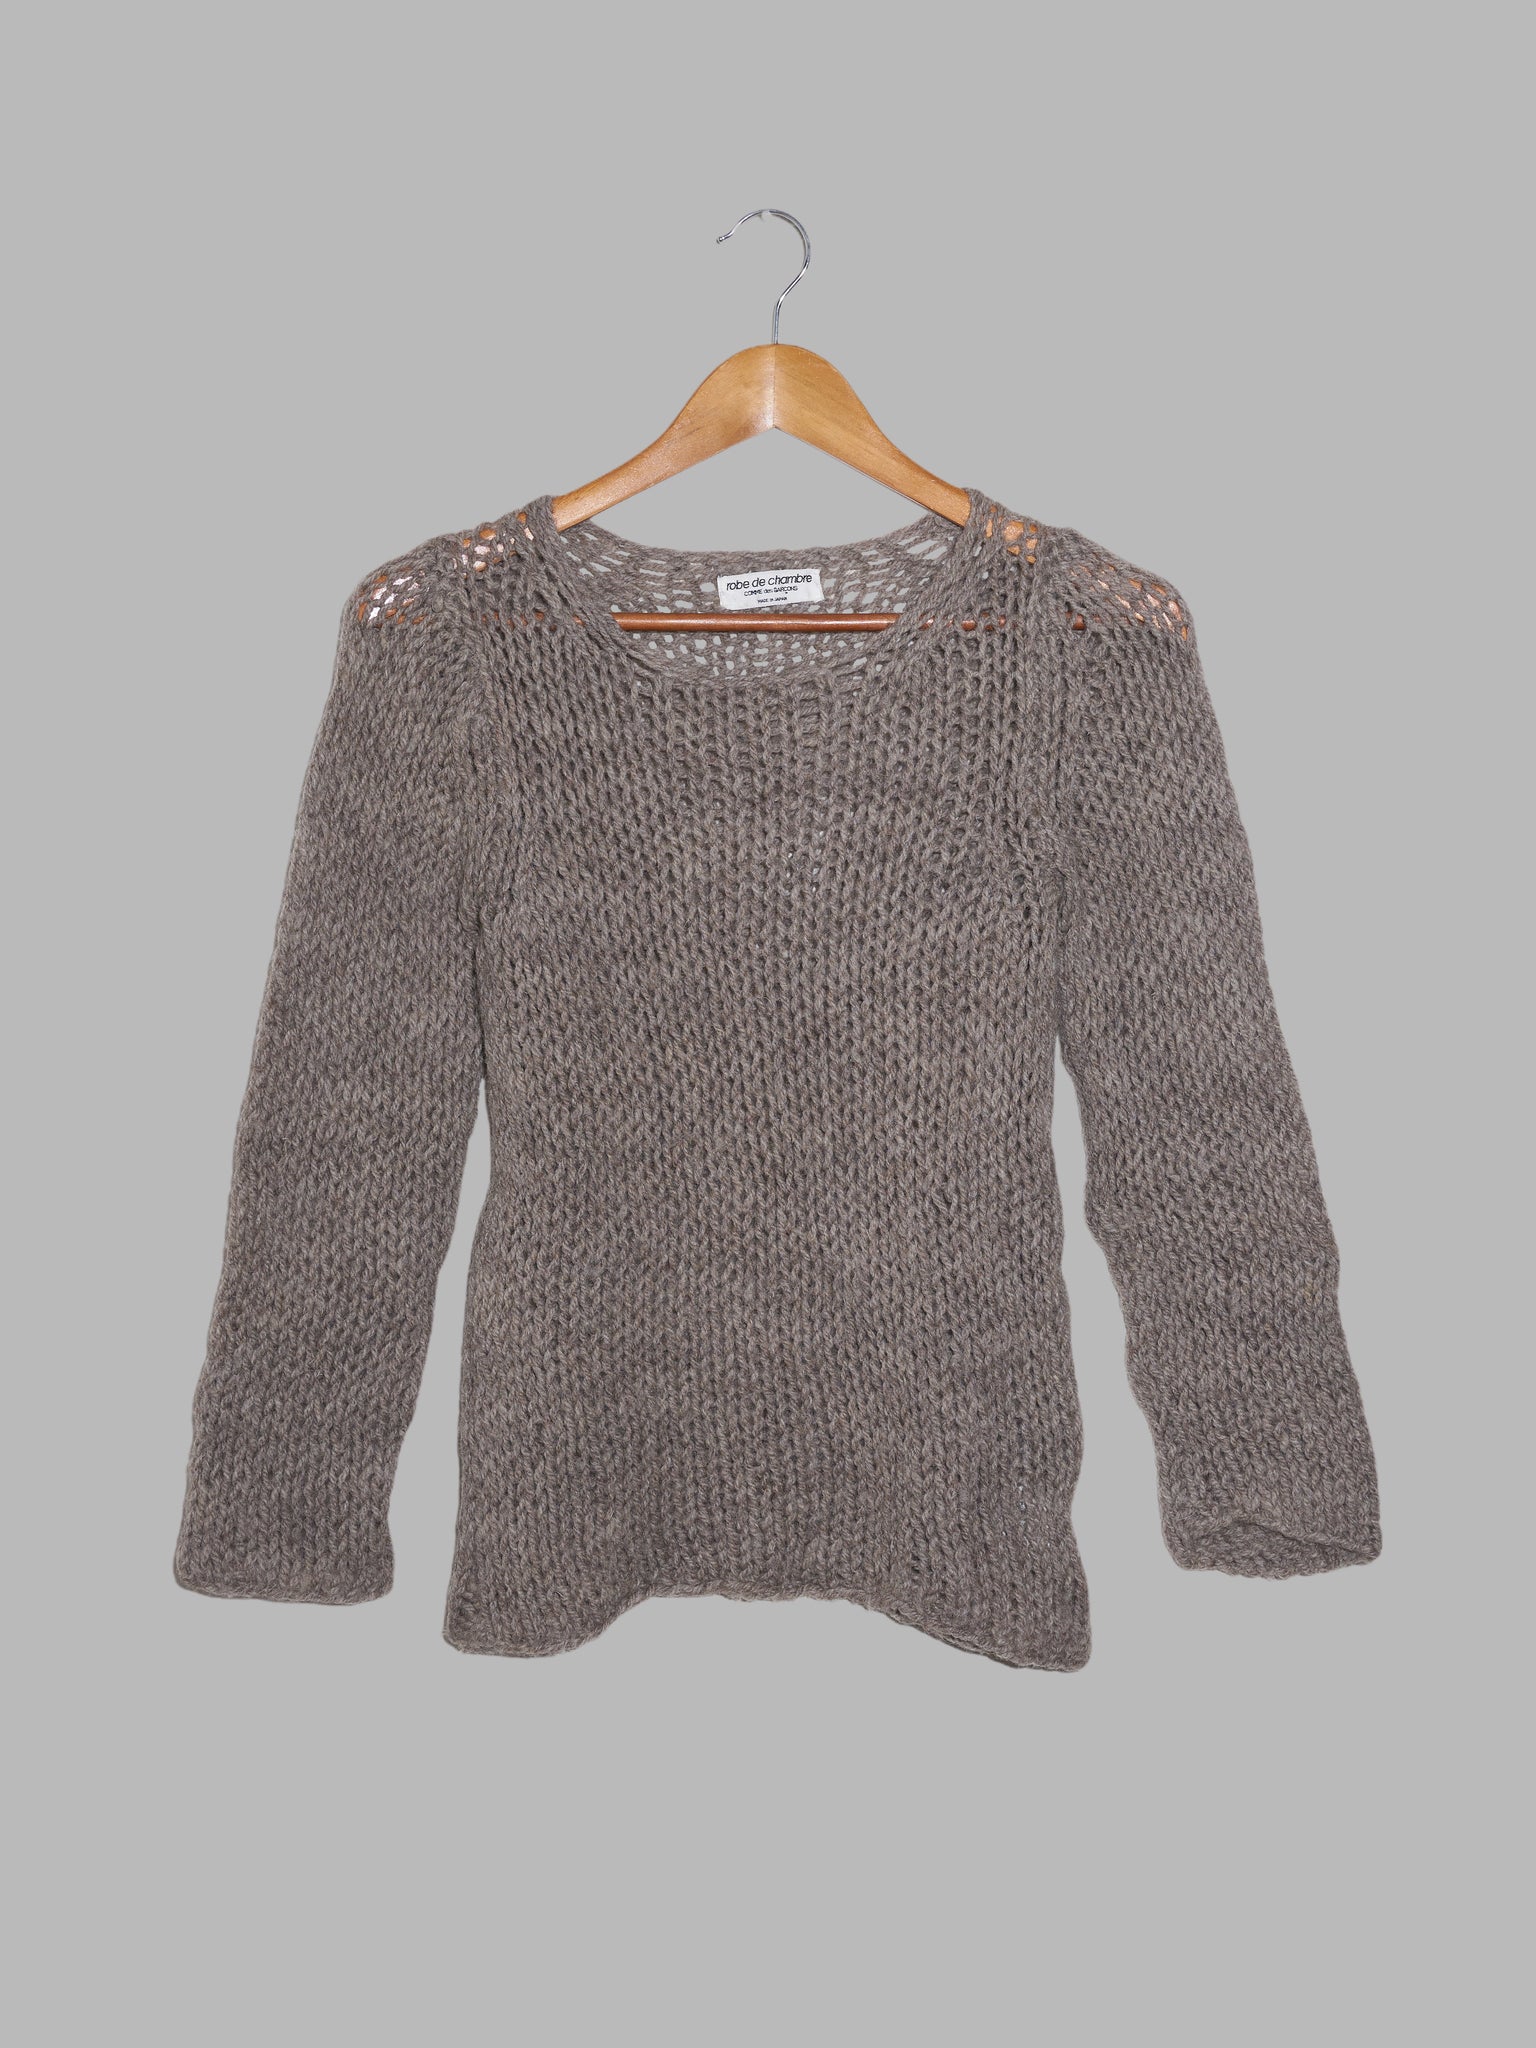 Robe de Chambre Comme des Garcons 1994 grey brown wool loose knit jumper - S